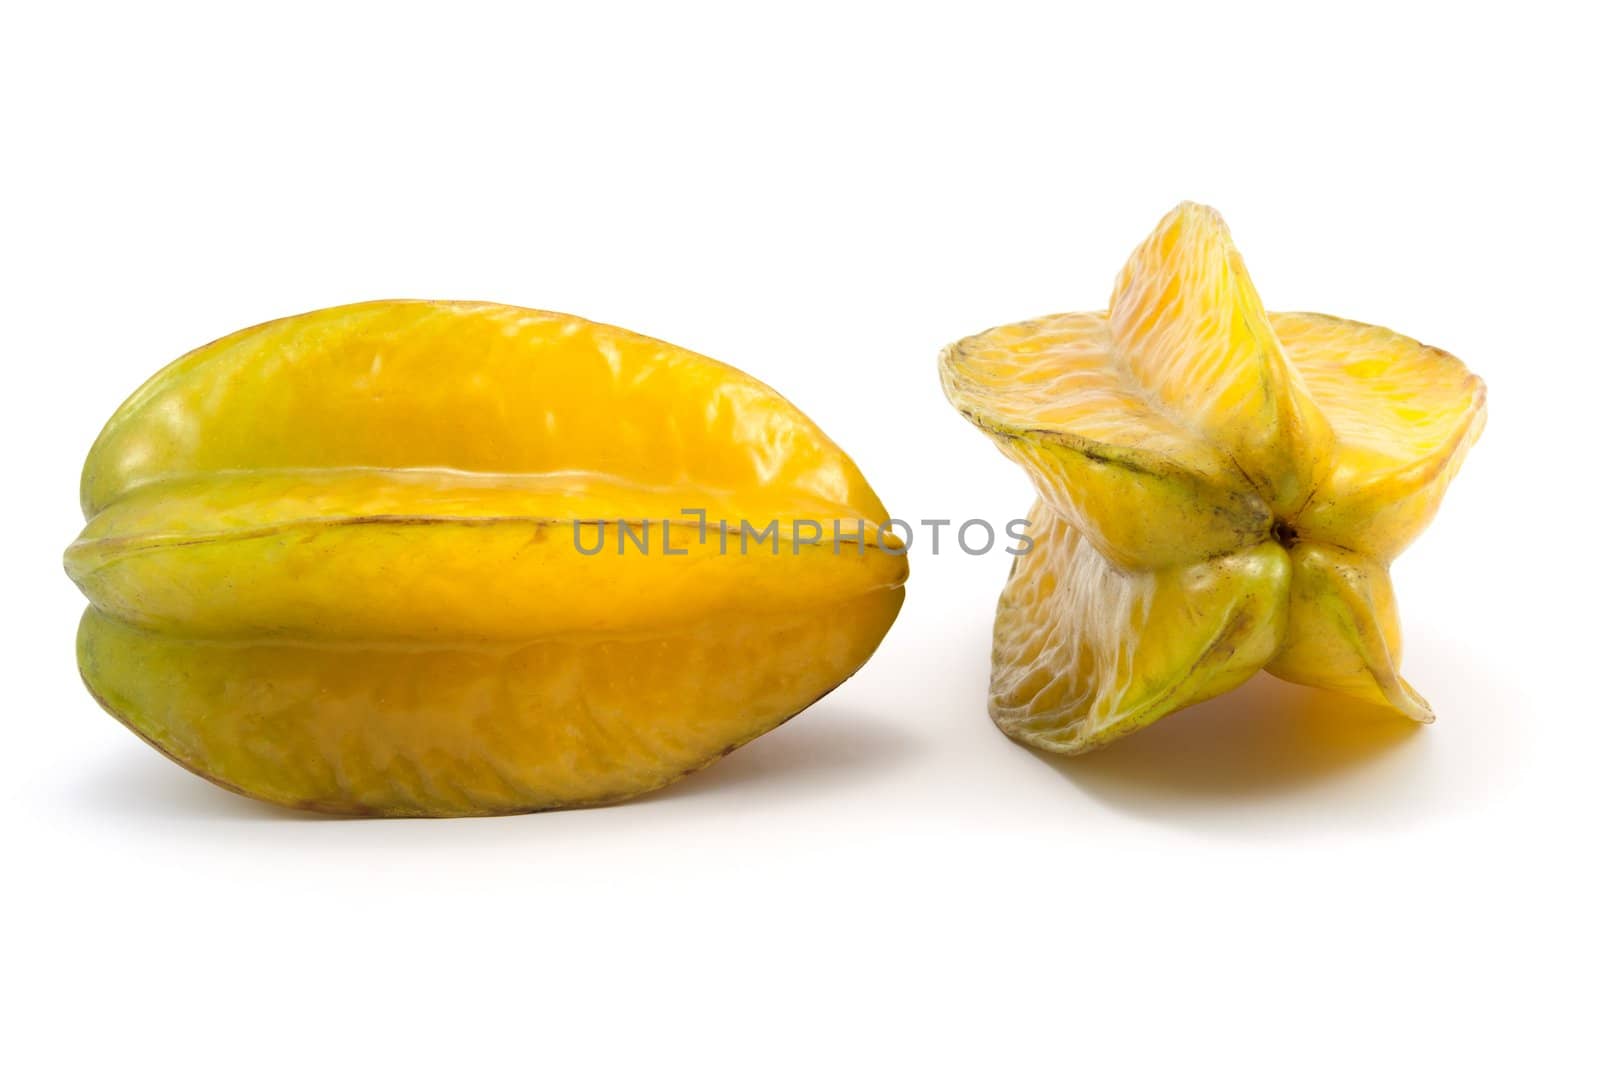 Two carambola fruits on white background